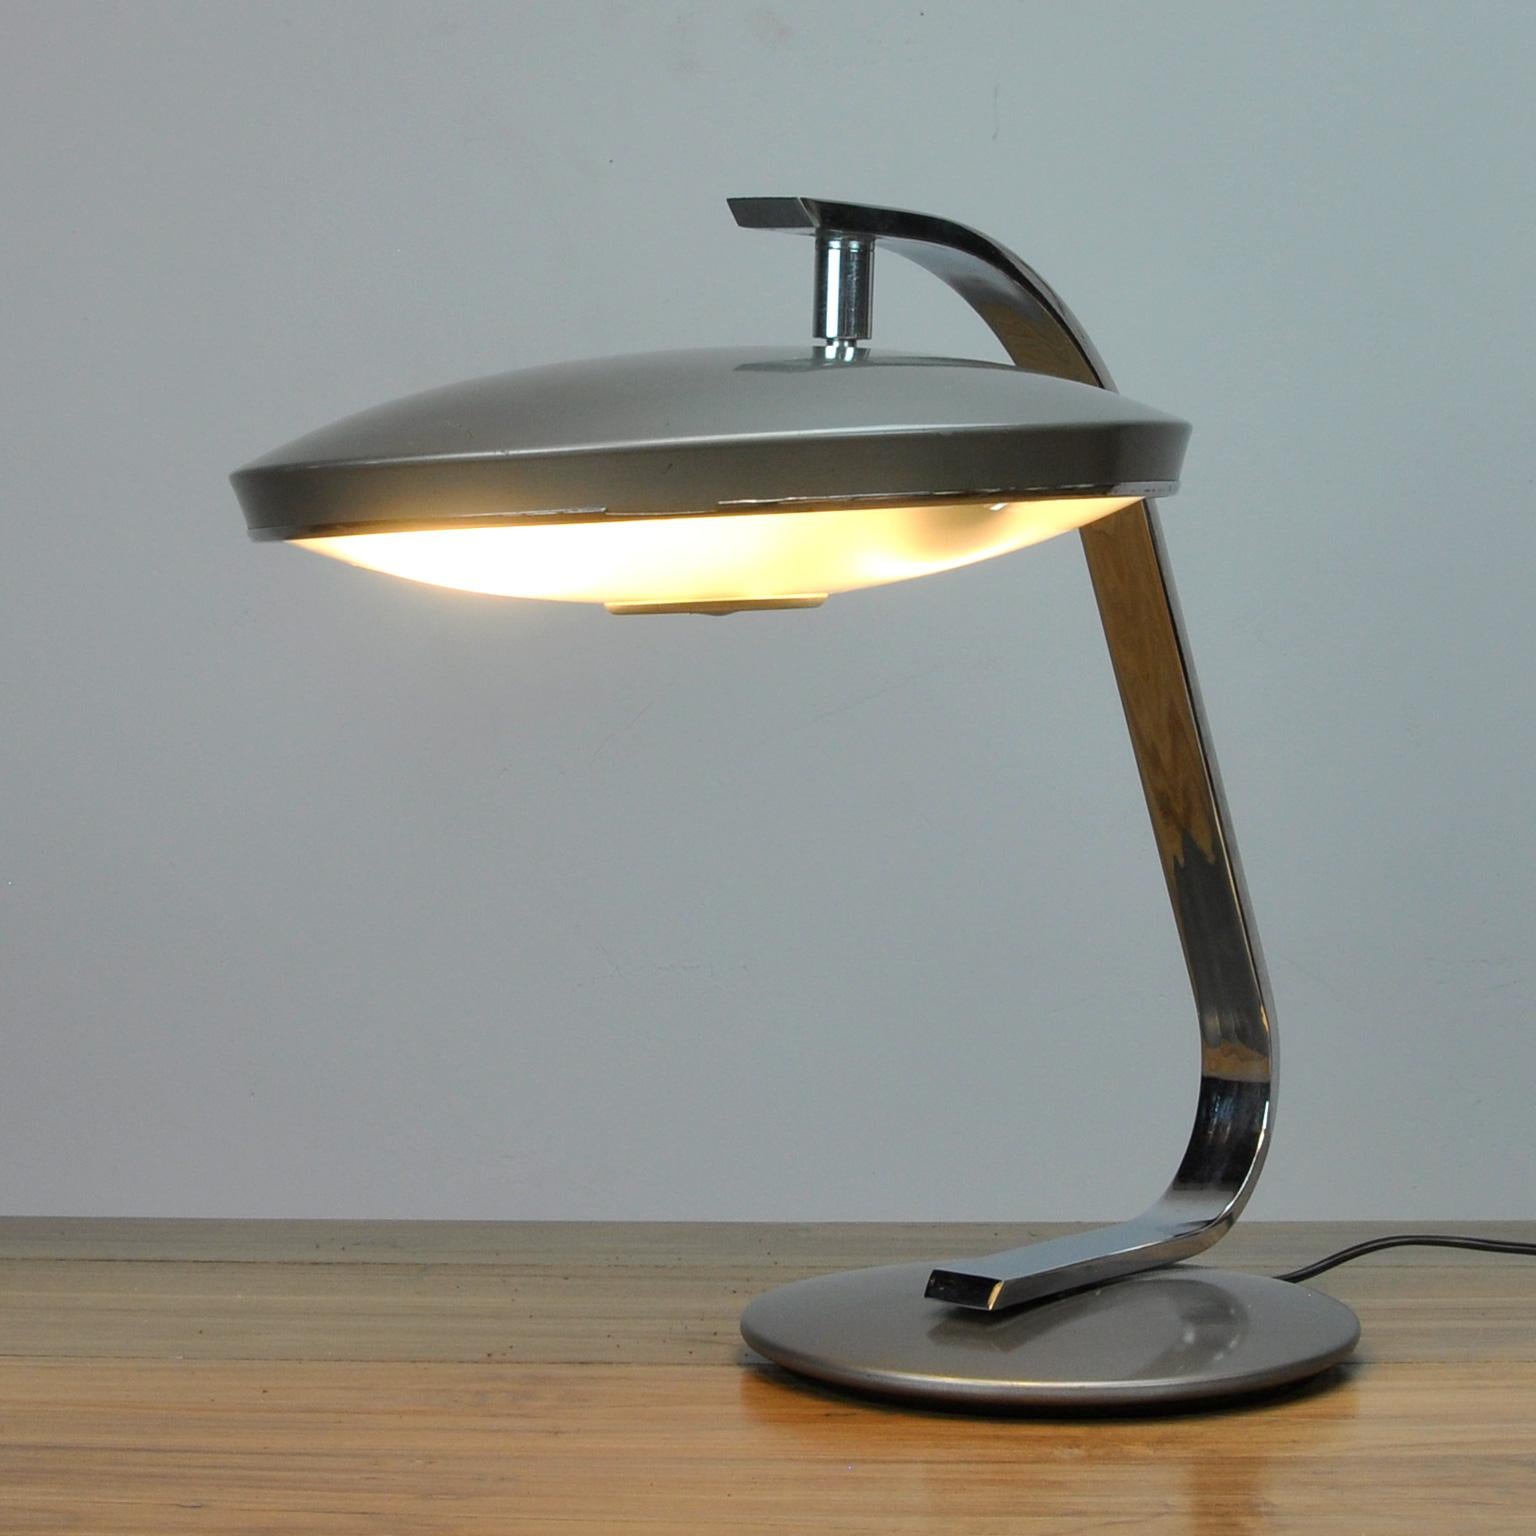 Spanish Desk Lamp Model 520 by Fase, 1970's